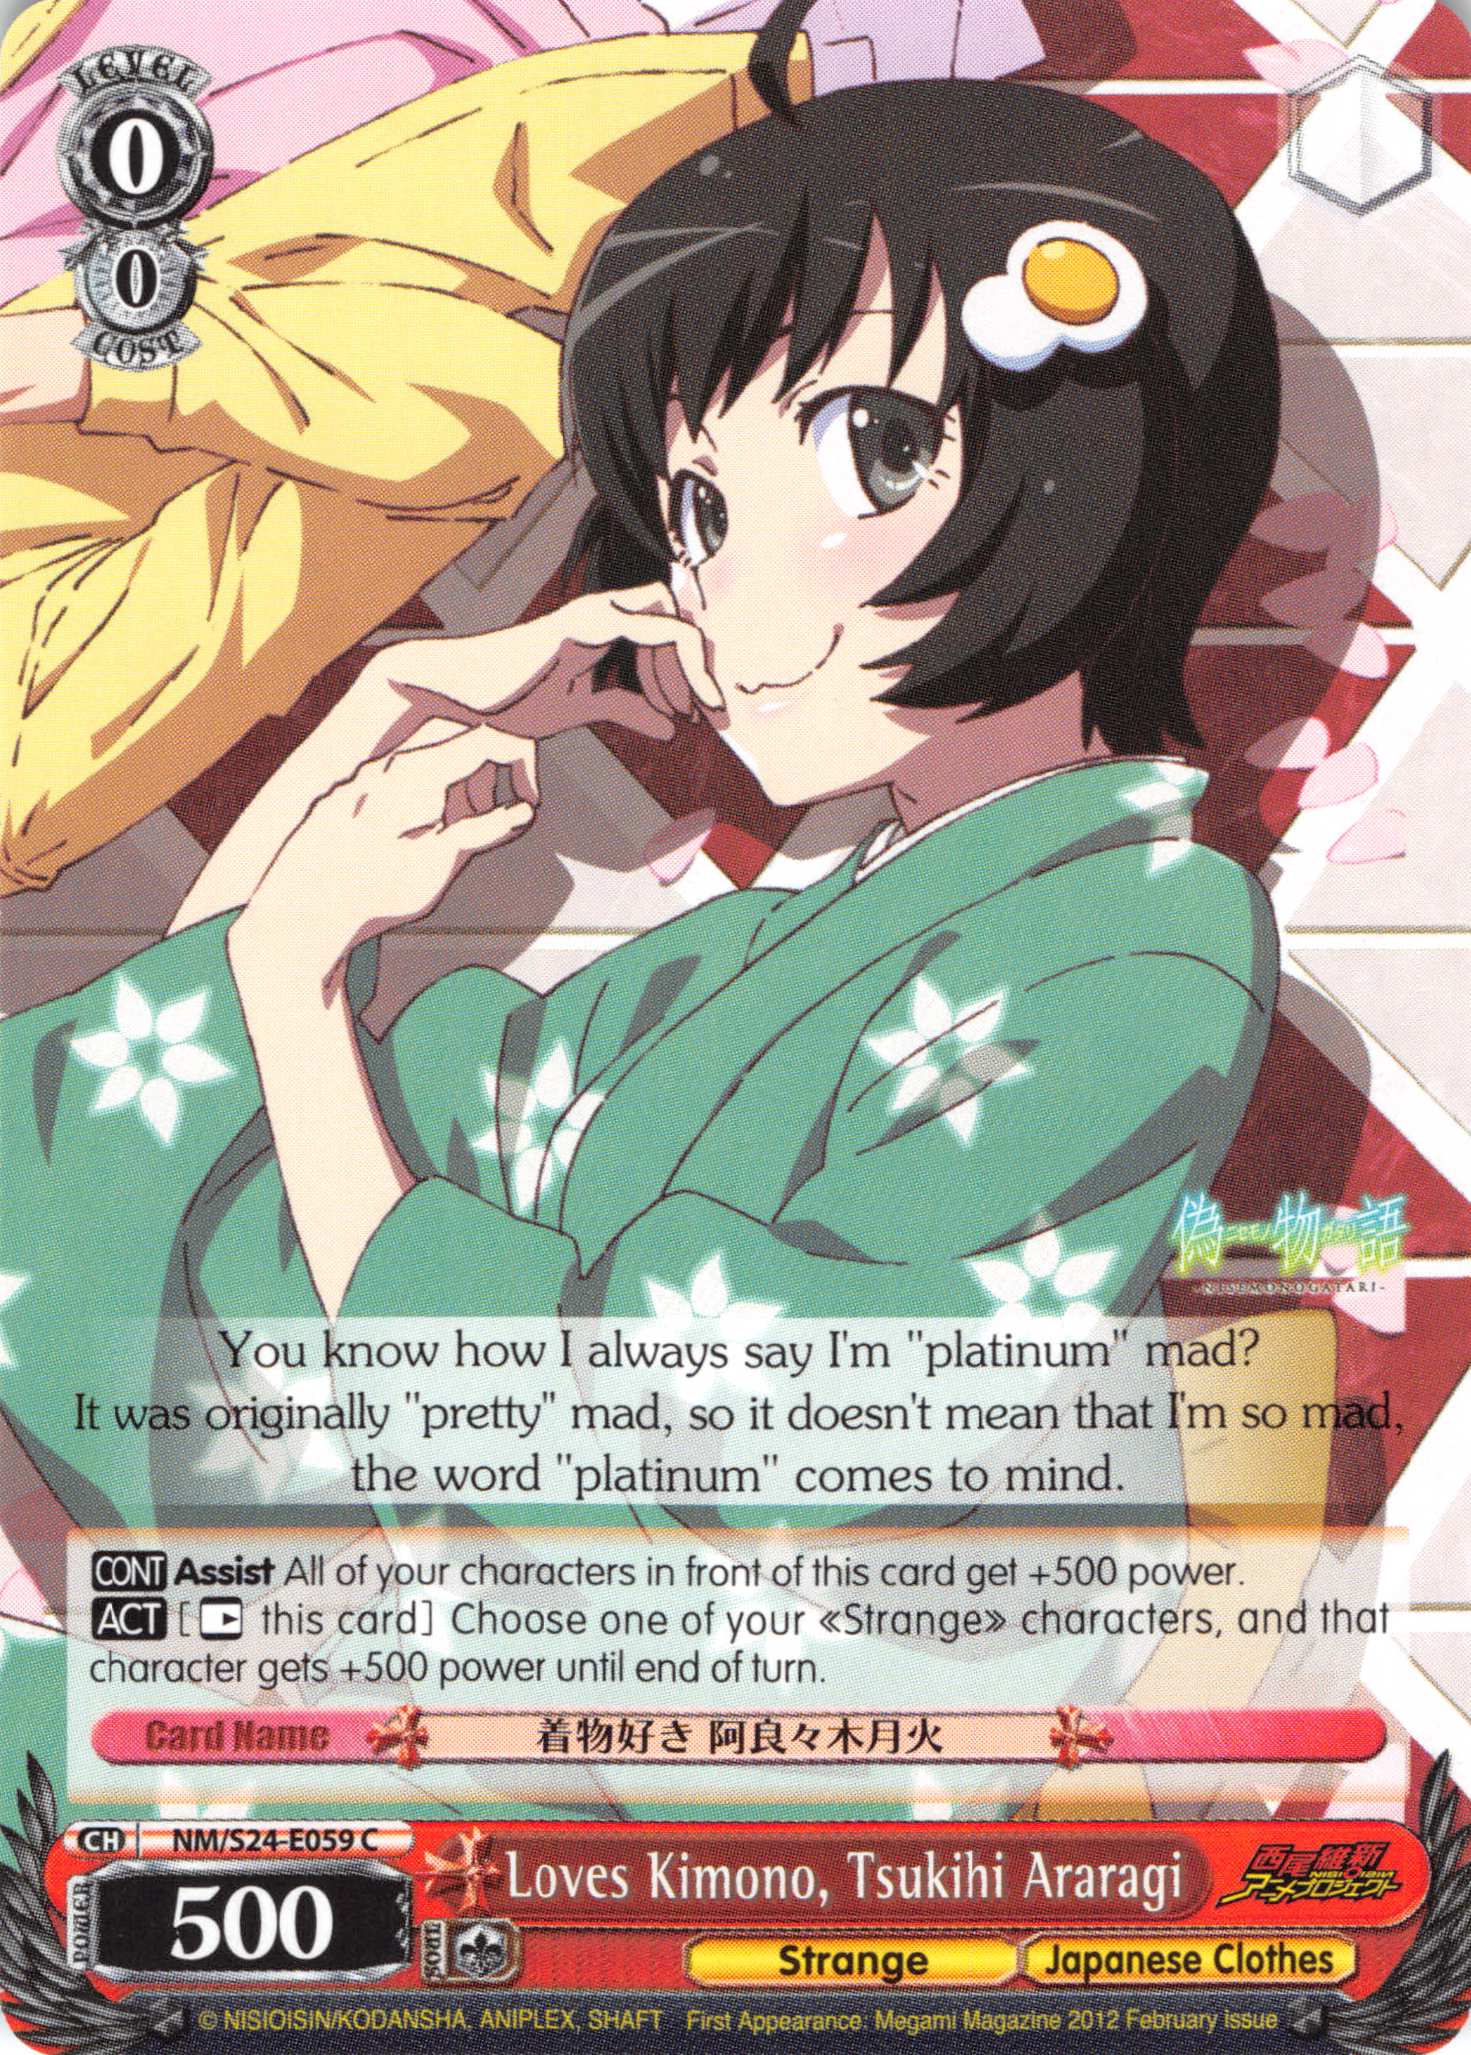 Loves Kimono, Tsukihi Araragi (NM/S24-E059) [NISEMONOGATARI]